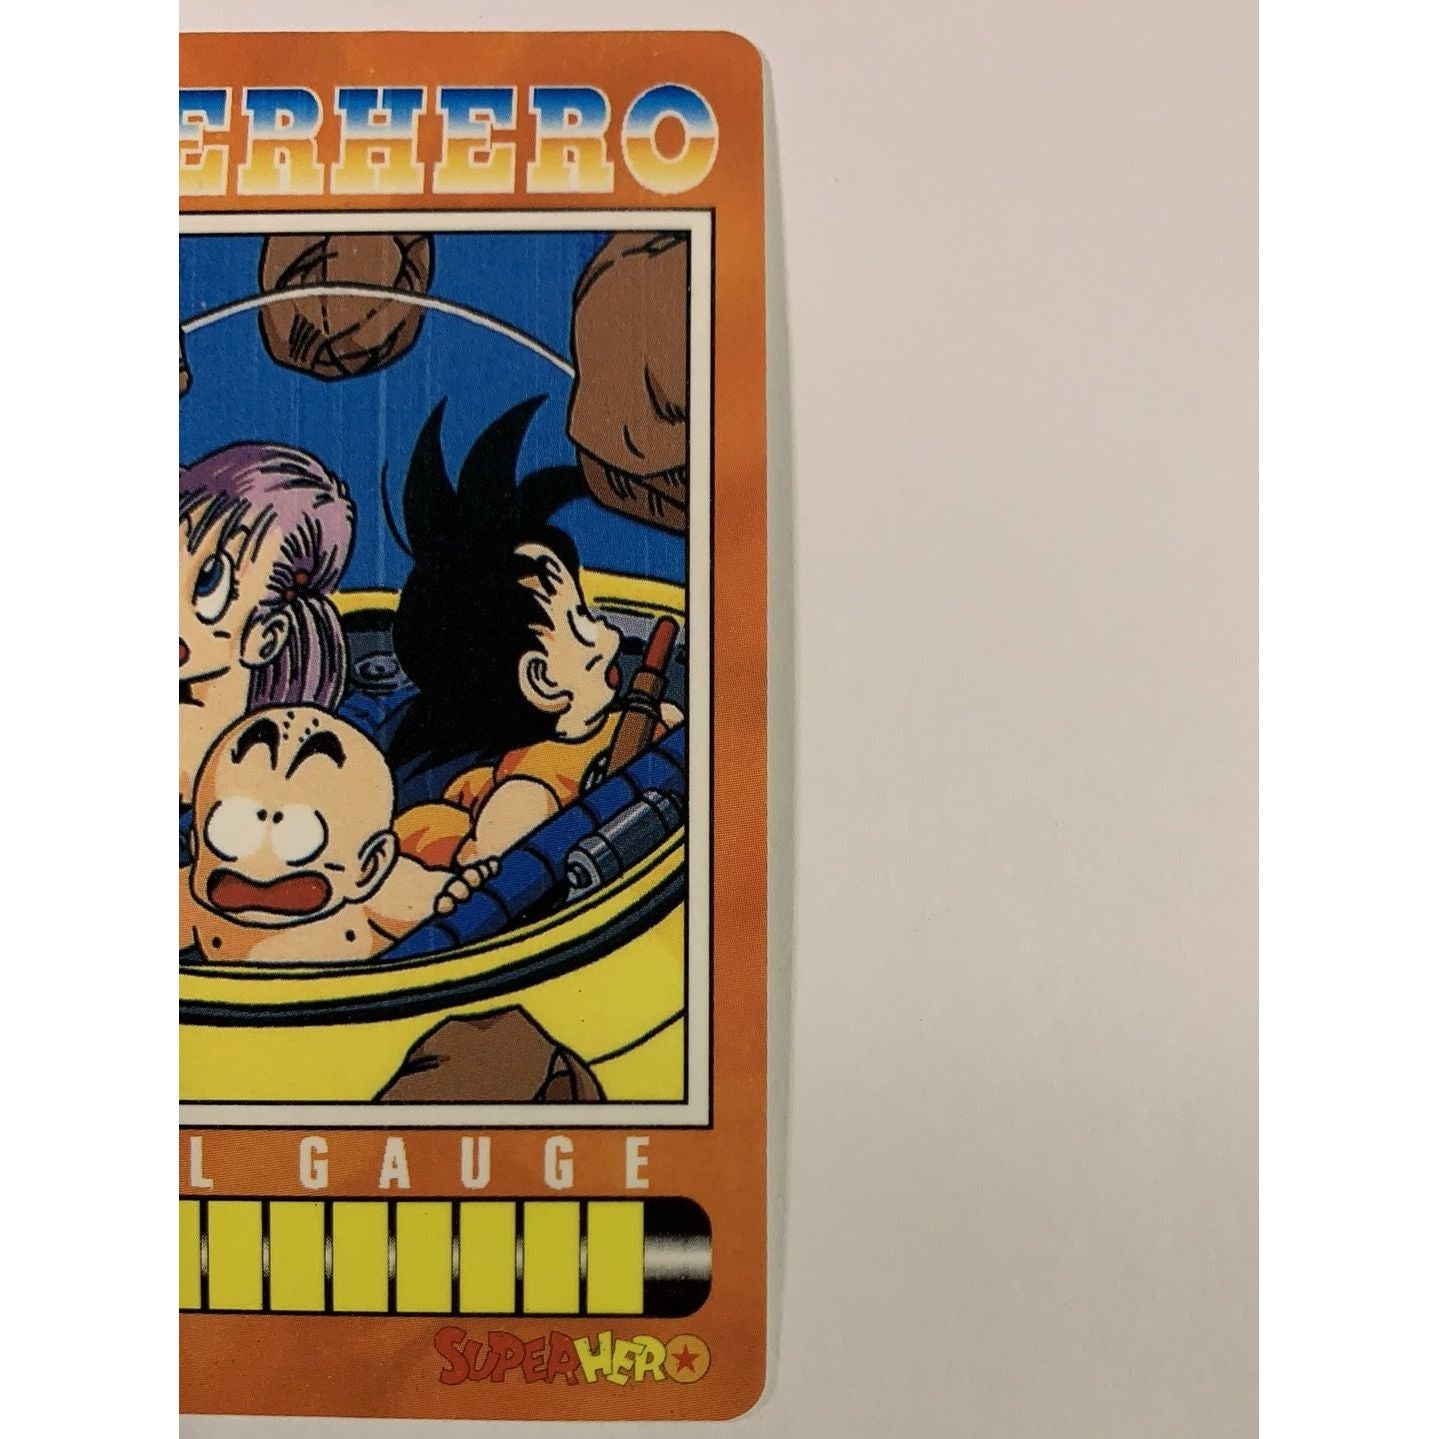  1995 Cardass Adali Super Hero Special Card S-114 Silver Foil Krillin Bulma & Goku  Local Legends Cards & Collectibles